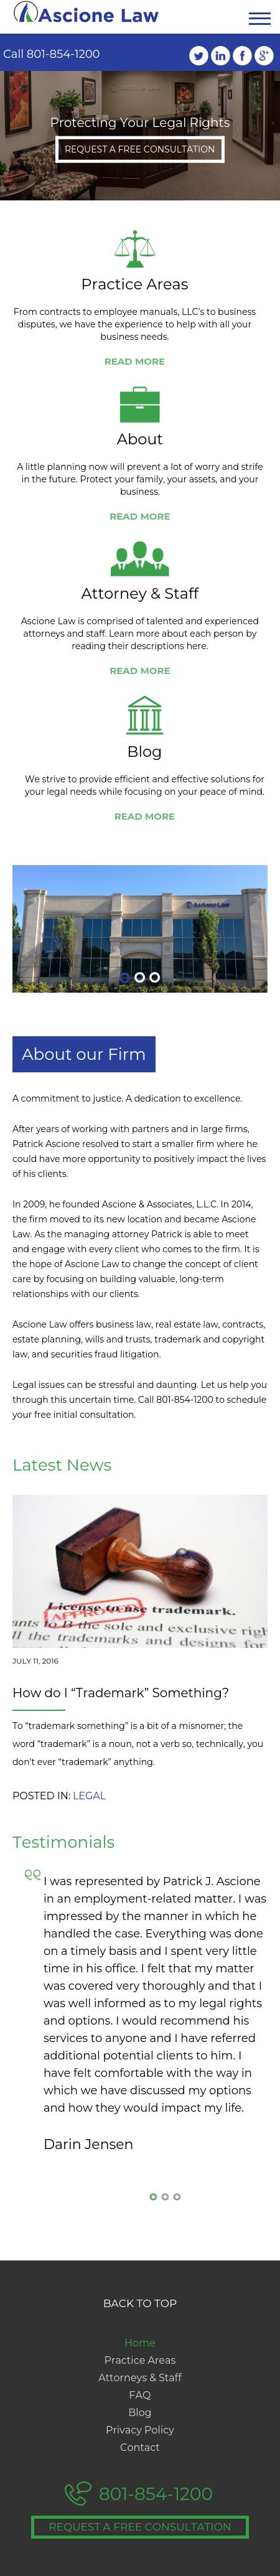 Ascione & Associates, L.L.C. - Orem UT Lawyers